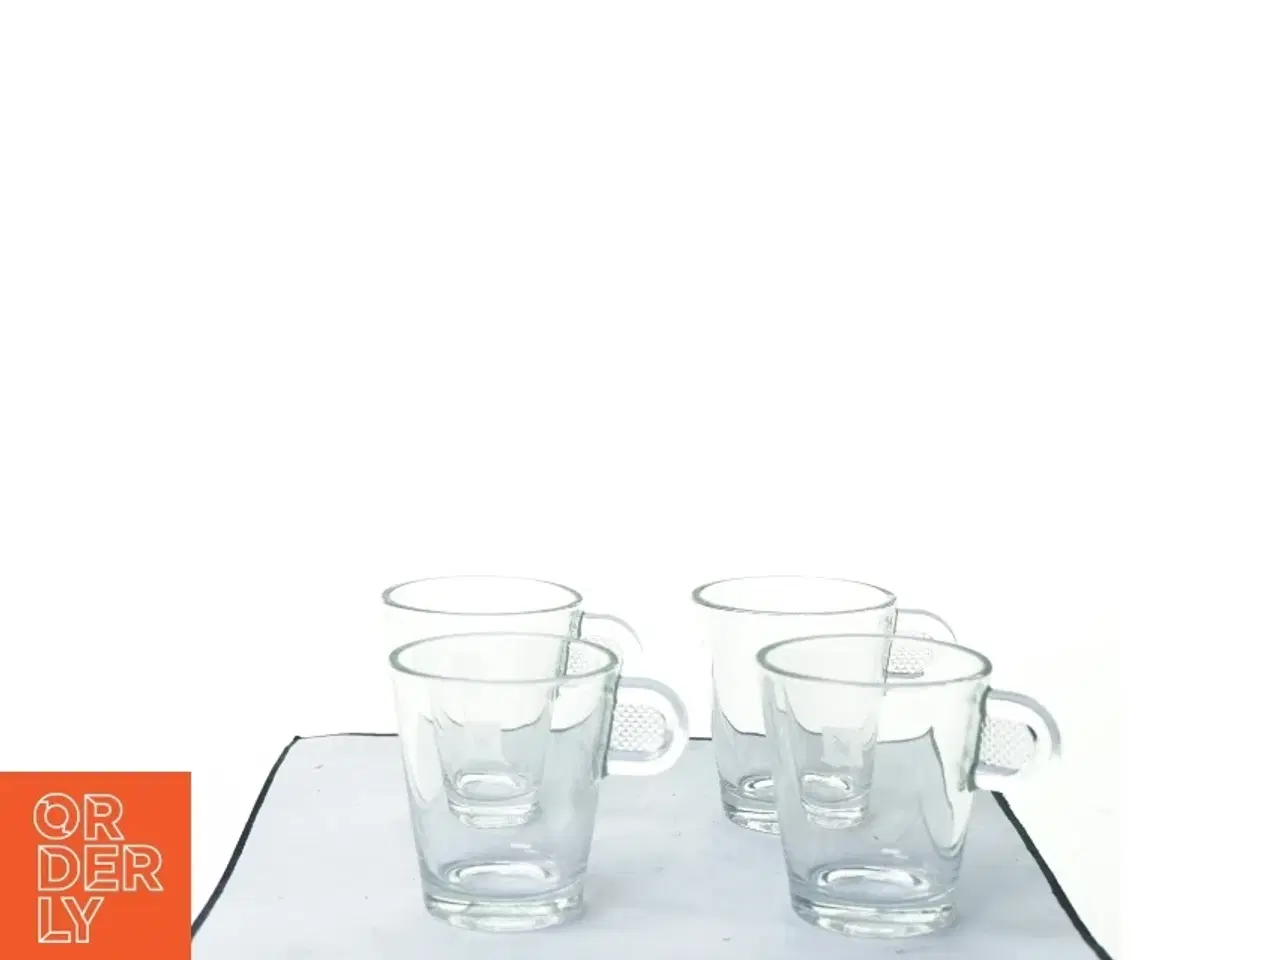 Billede 1 - Nespresso glaskopper fra Nespresso (str. 6 x 5 cm)